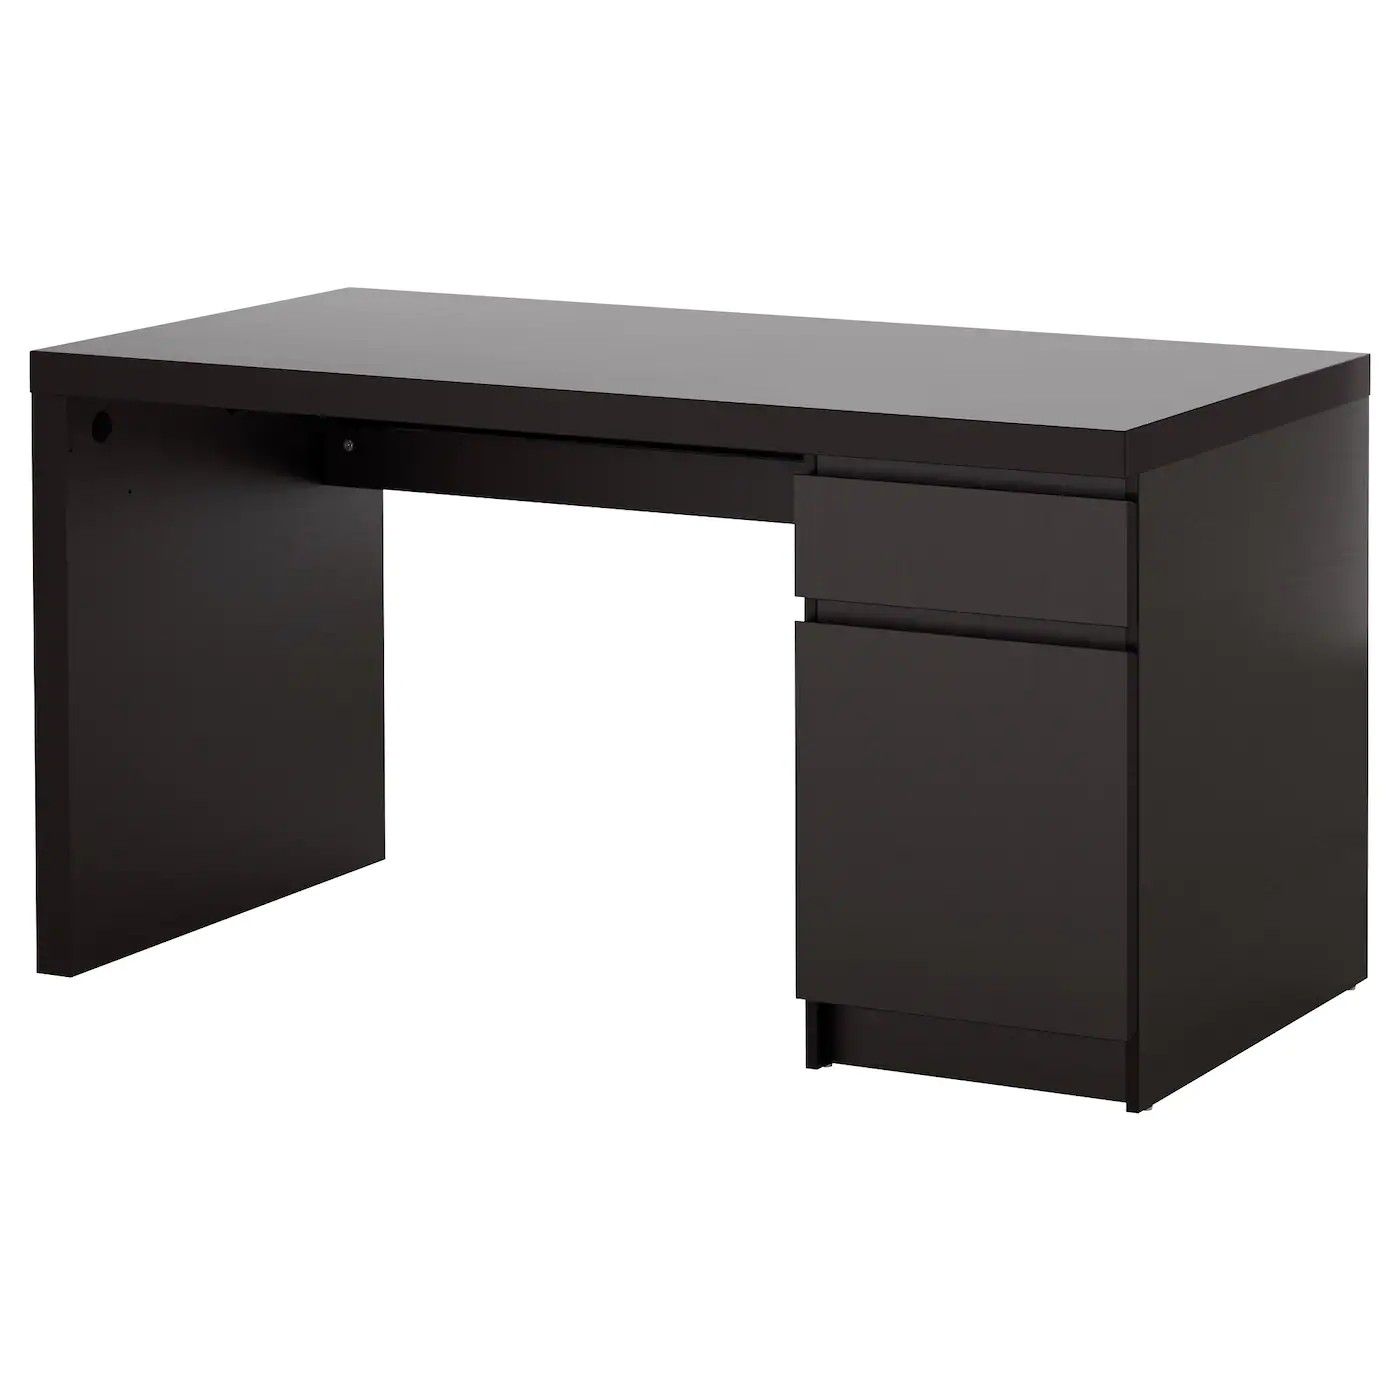 Ikea malm desk. ($90)